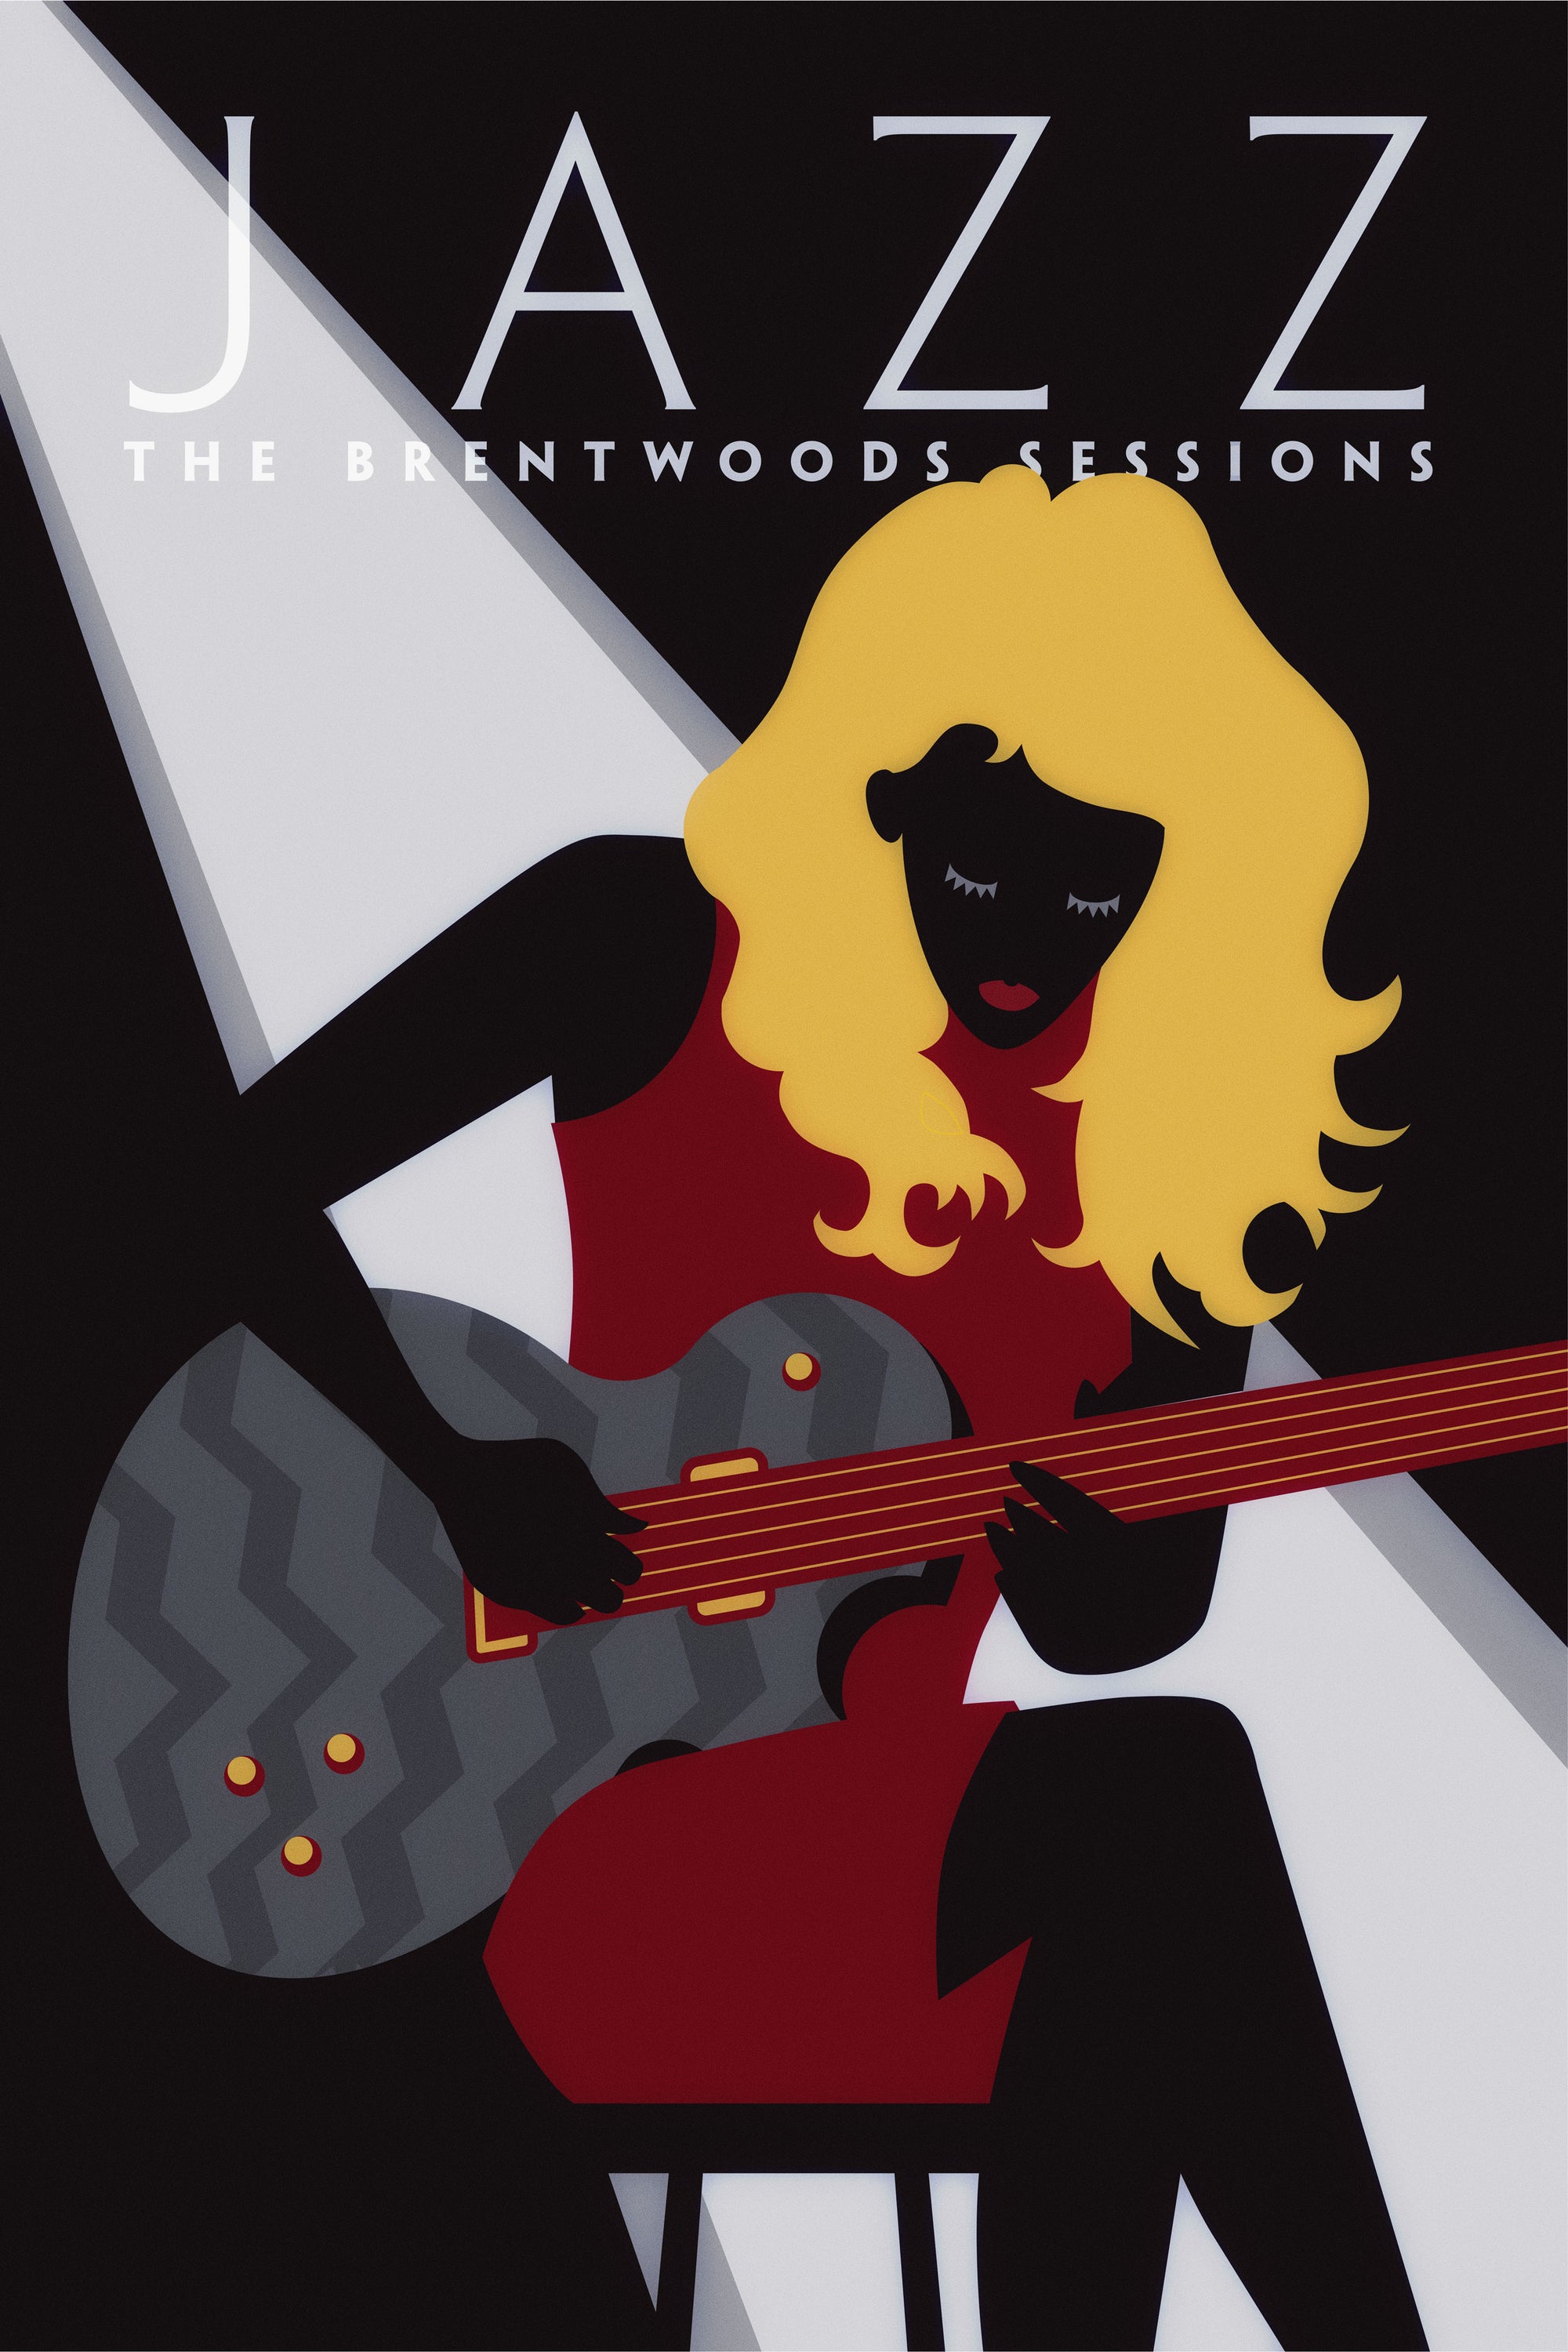 Black graphic giclee art print of blonde female jazz guitarist with spotlight.